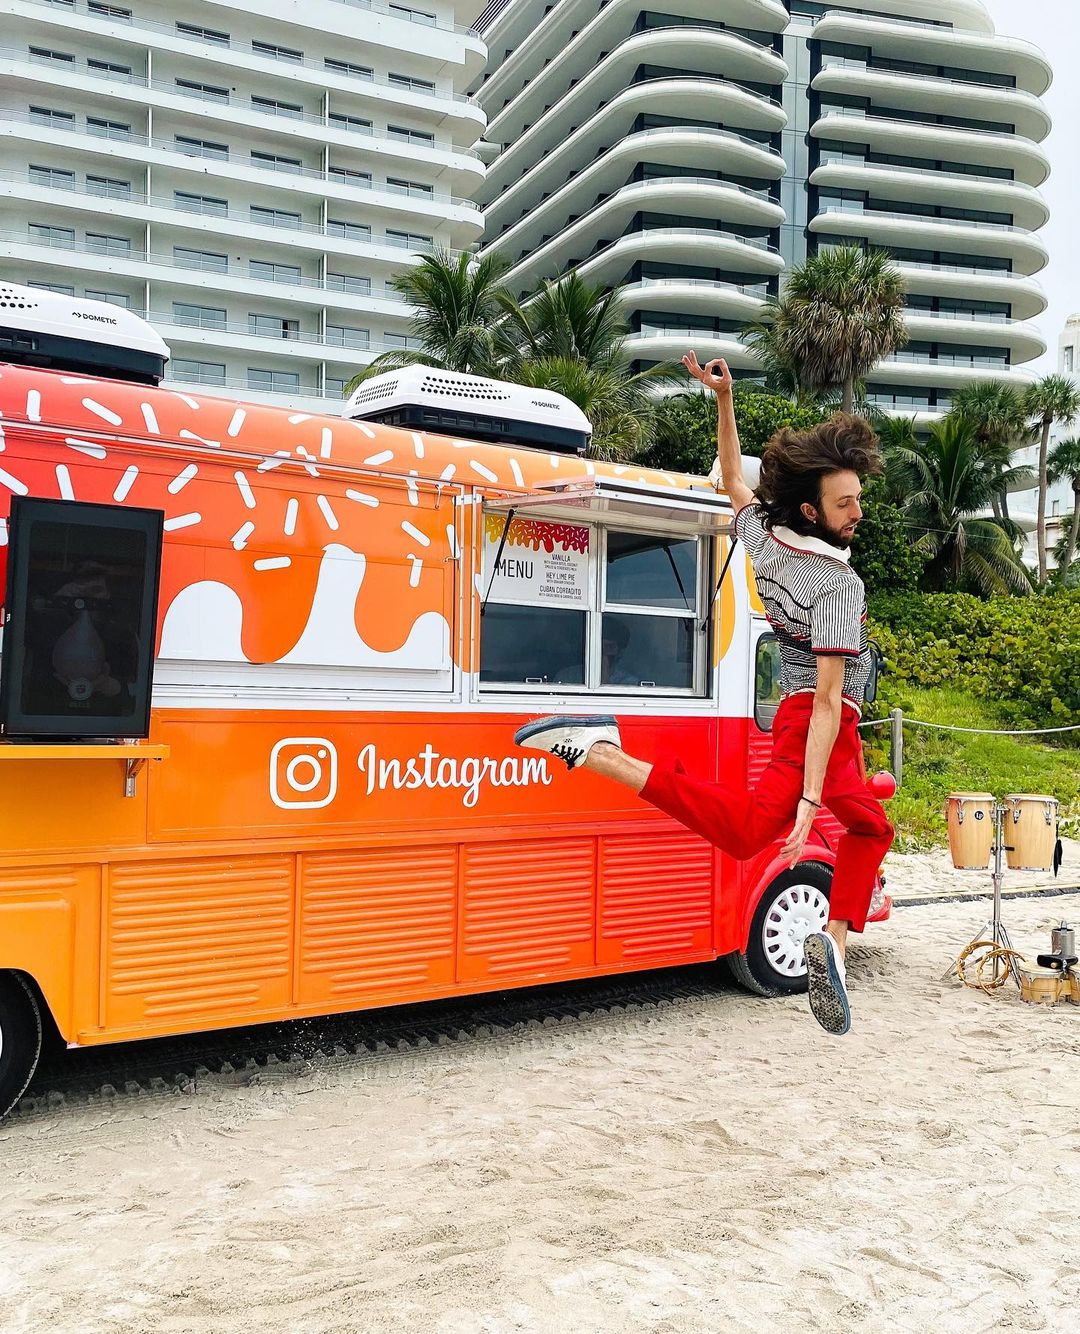 Instagram Mobile Experiential Marketing in Miami Beach